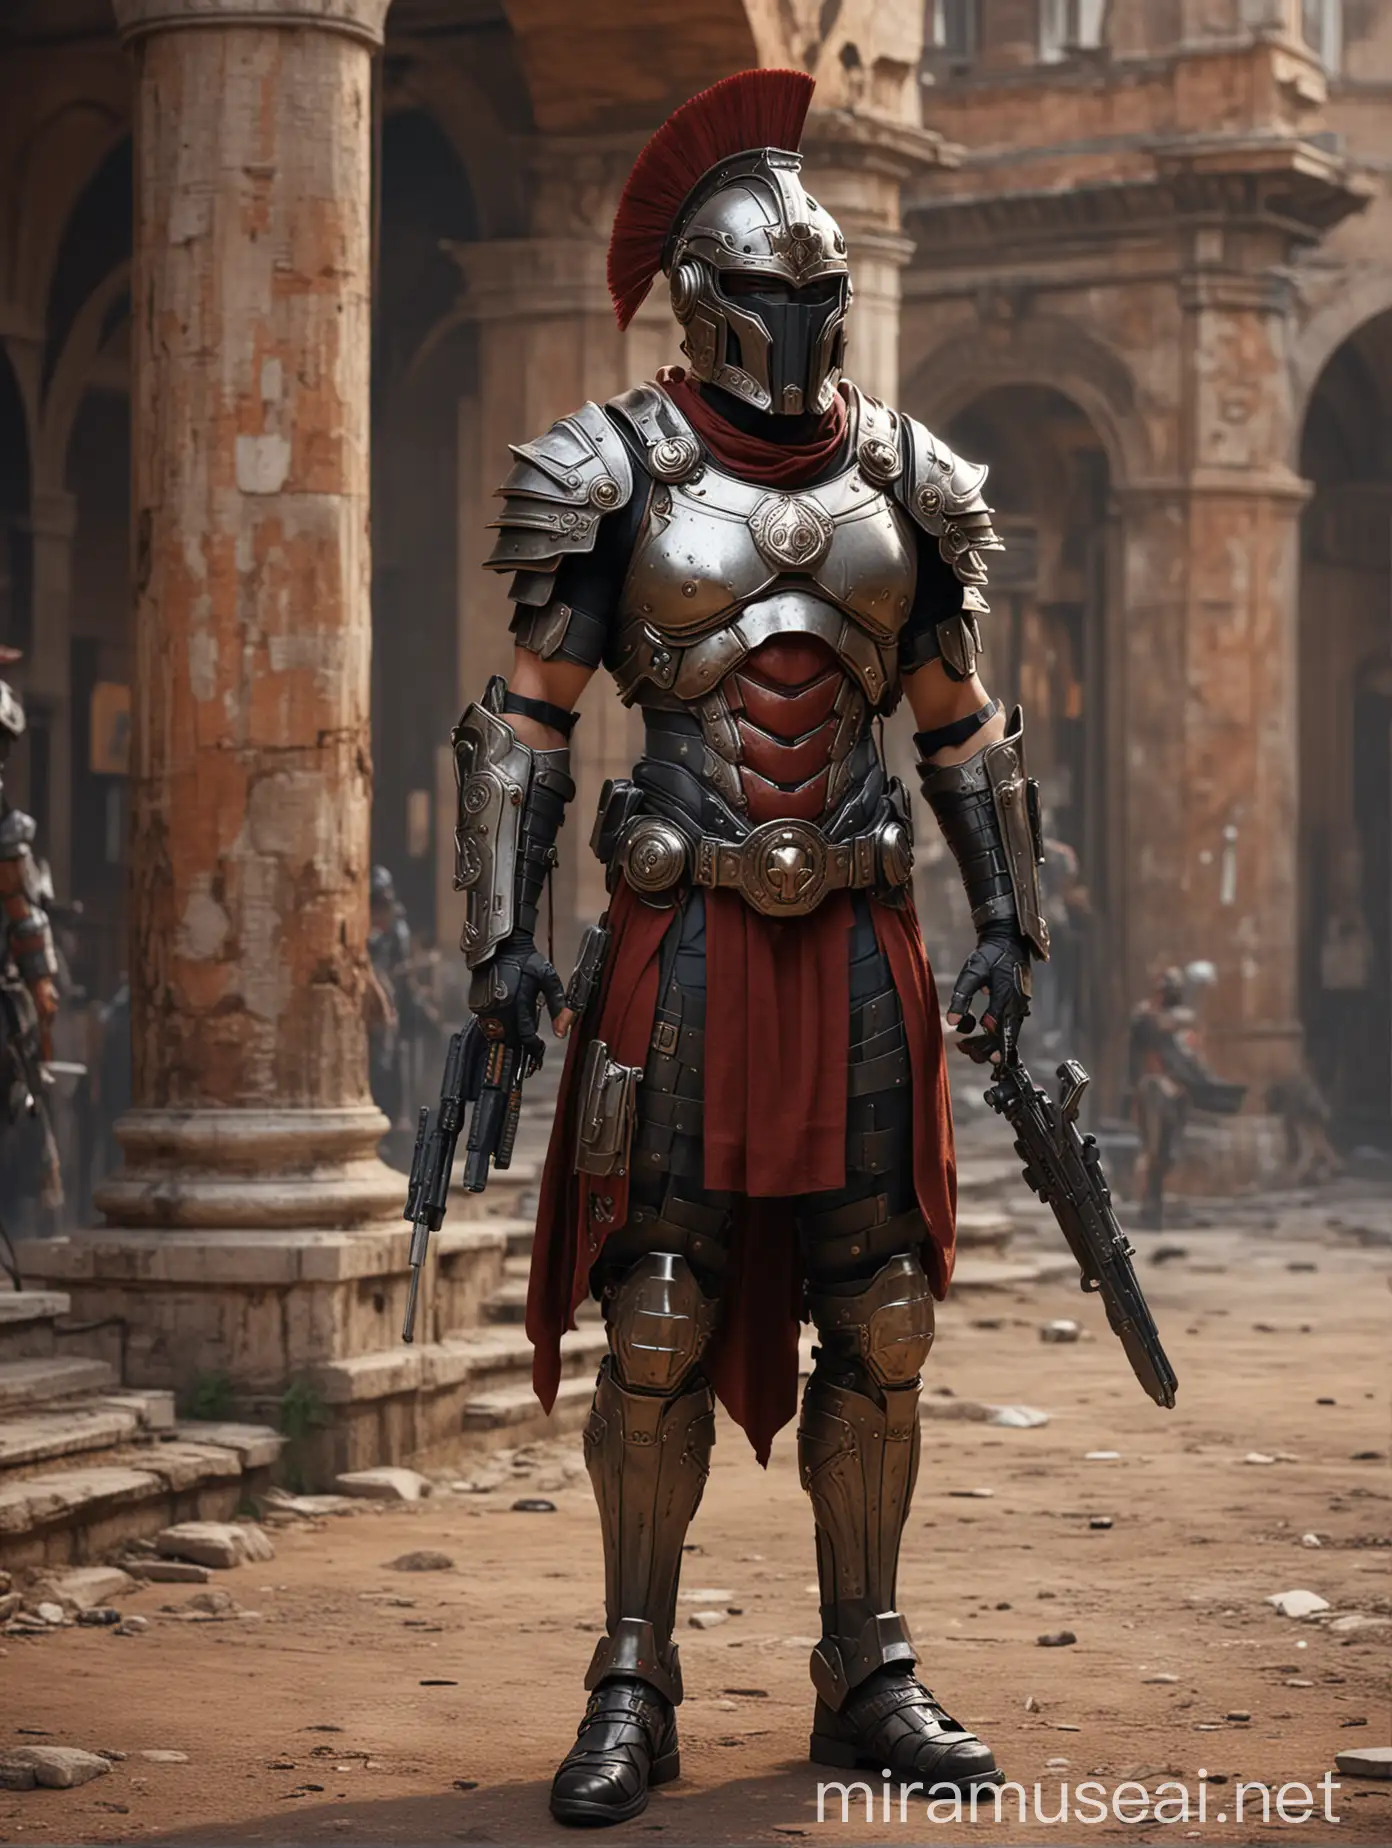 SciFi Royal Guardian in Cyberpunk Gladiator Armor